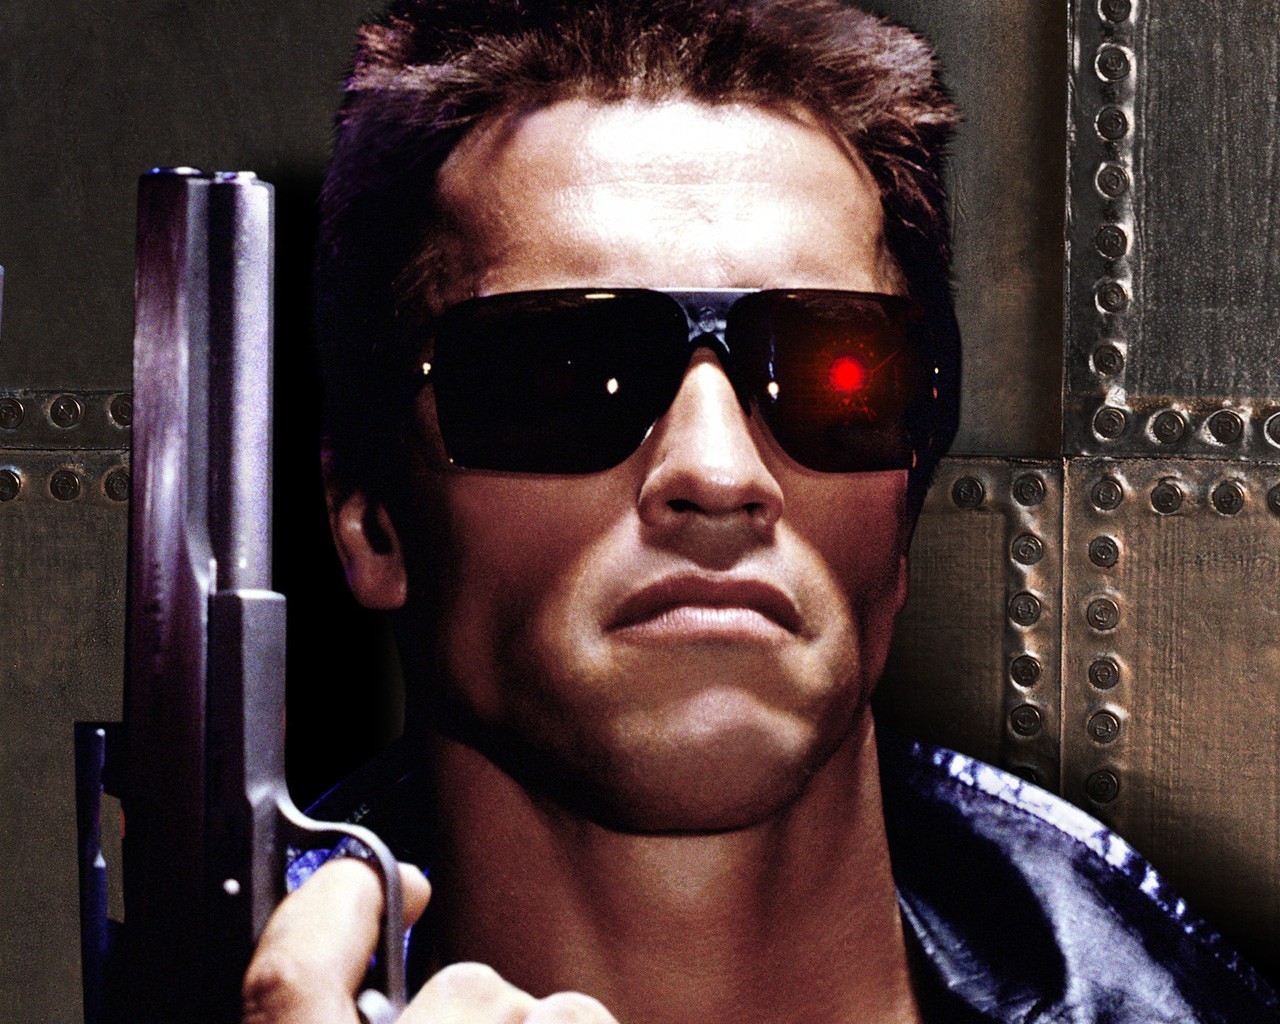 1984 The Terminator